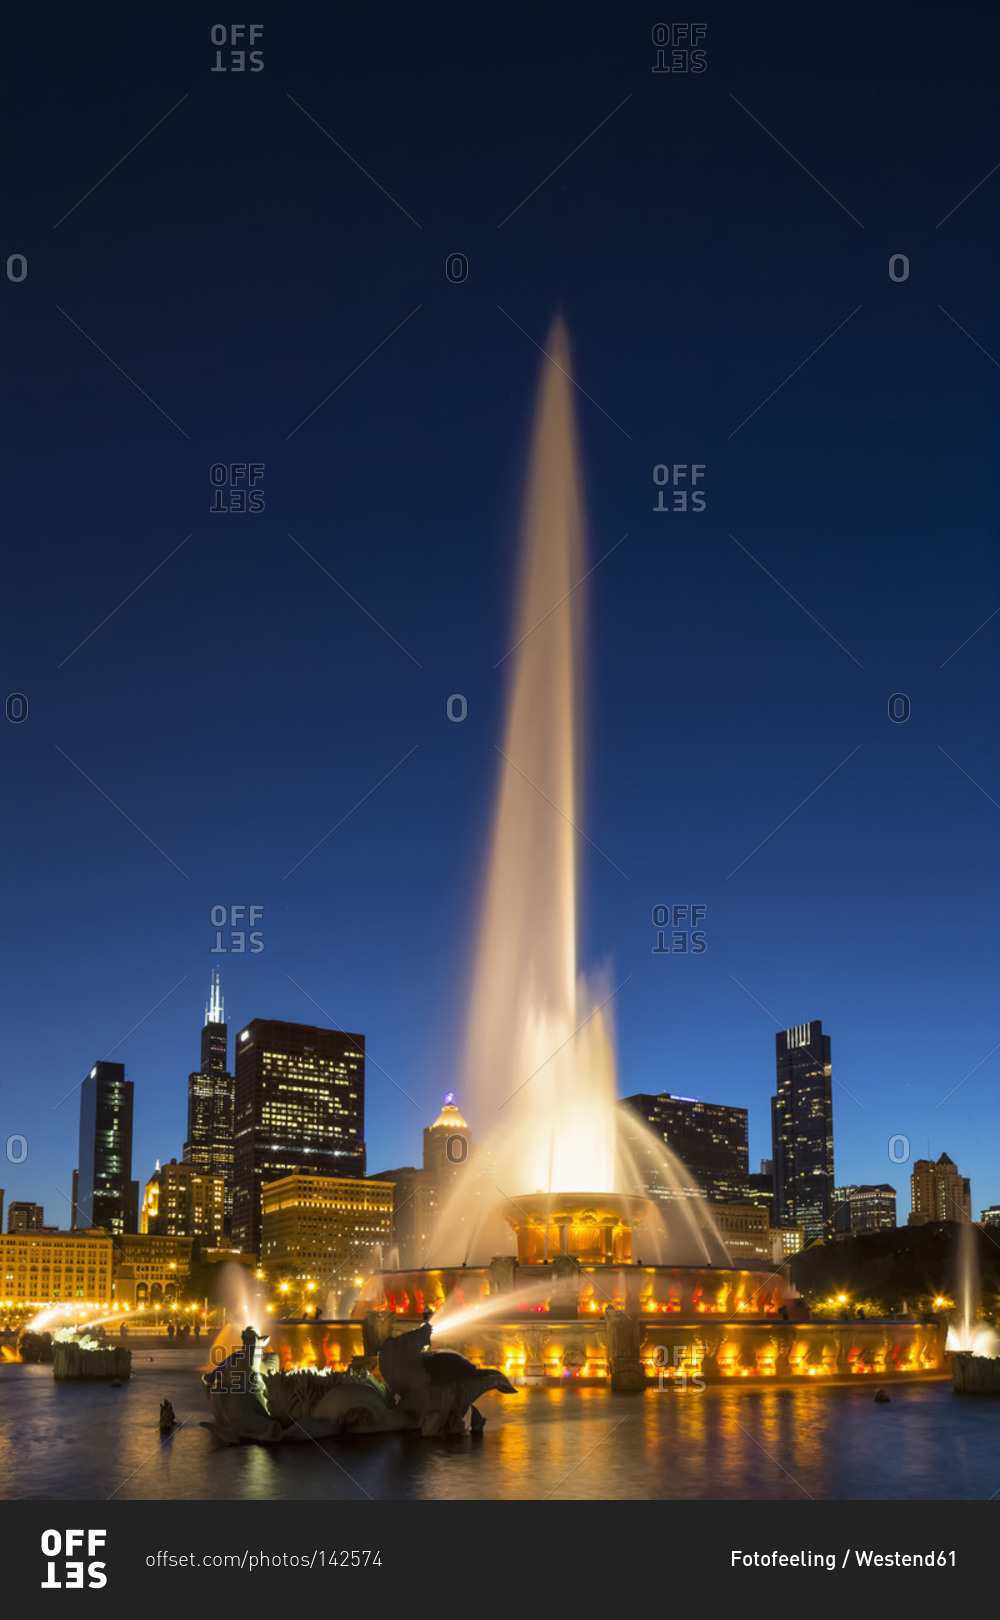 Millennium Park with Buckingham Fountain at night, Chicago